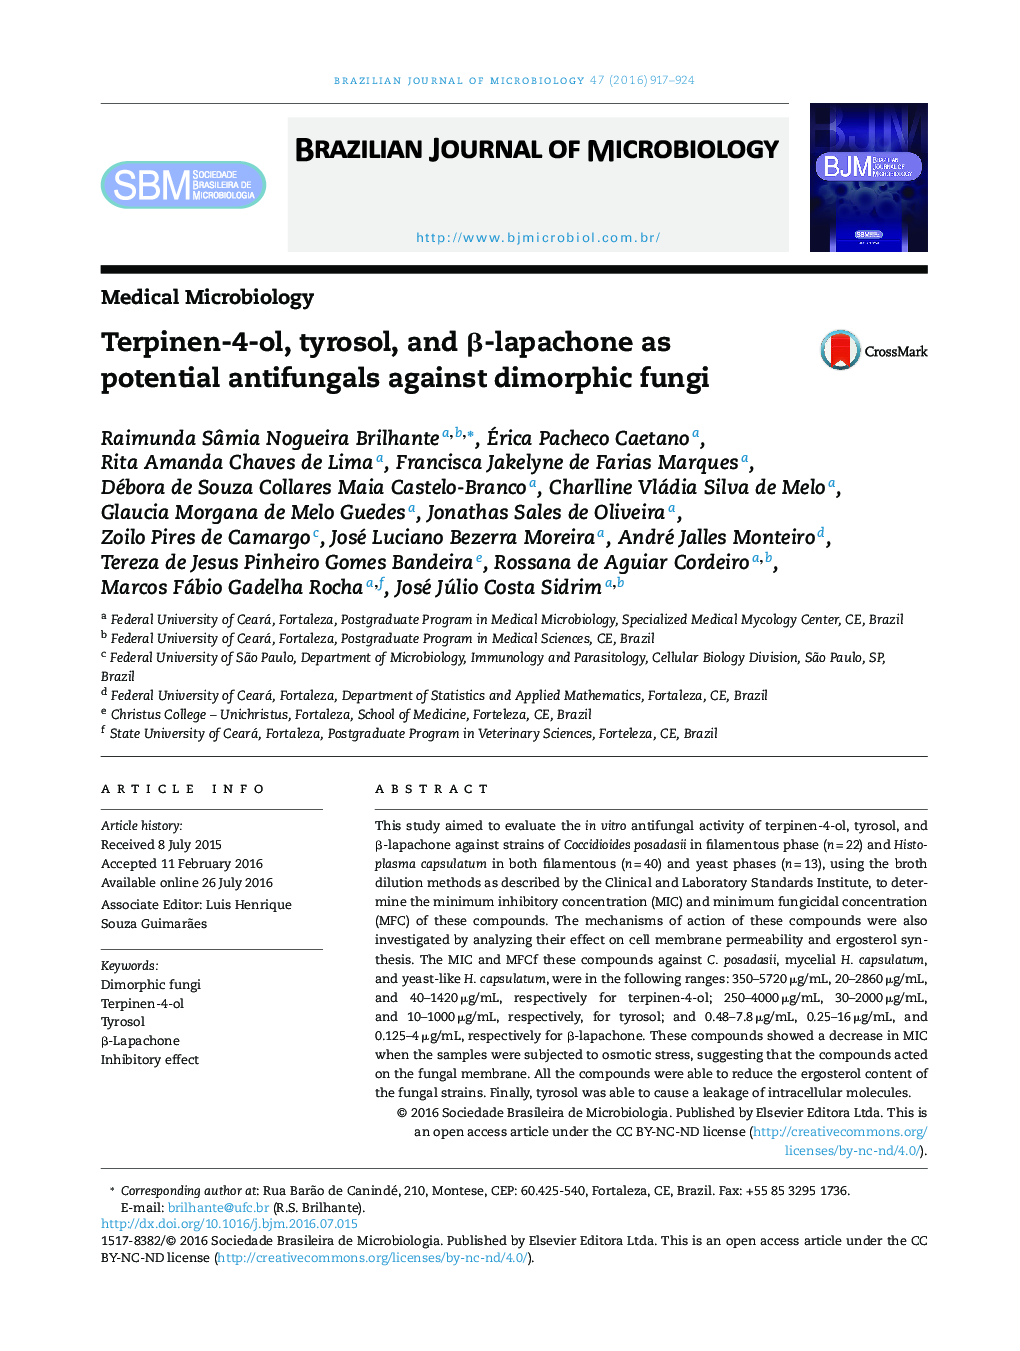 Terpinen-4-ol, tyrosol, and β-lapachone as potential antifungals against dimorphic fungi